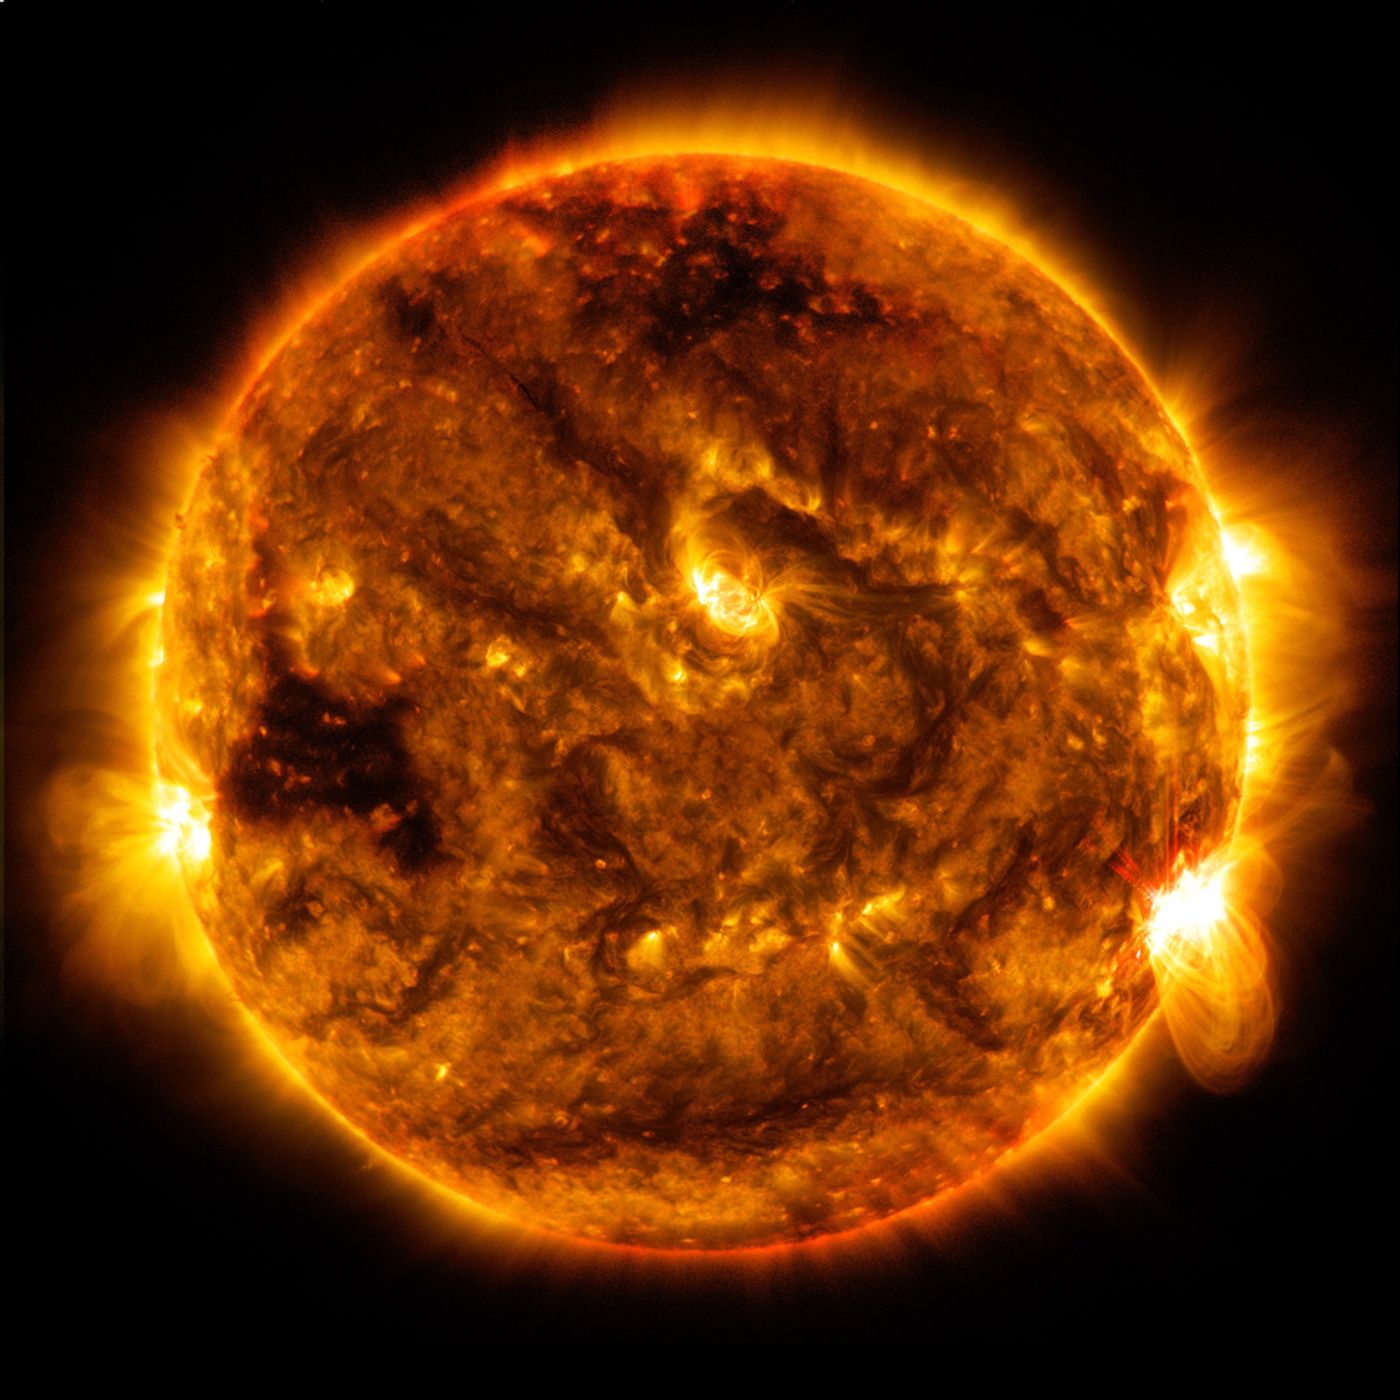 The Sun as seen from NASA's Solar Dynamics Observatory (SDO).